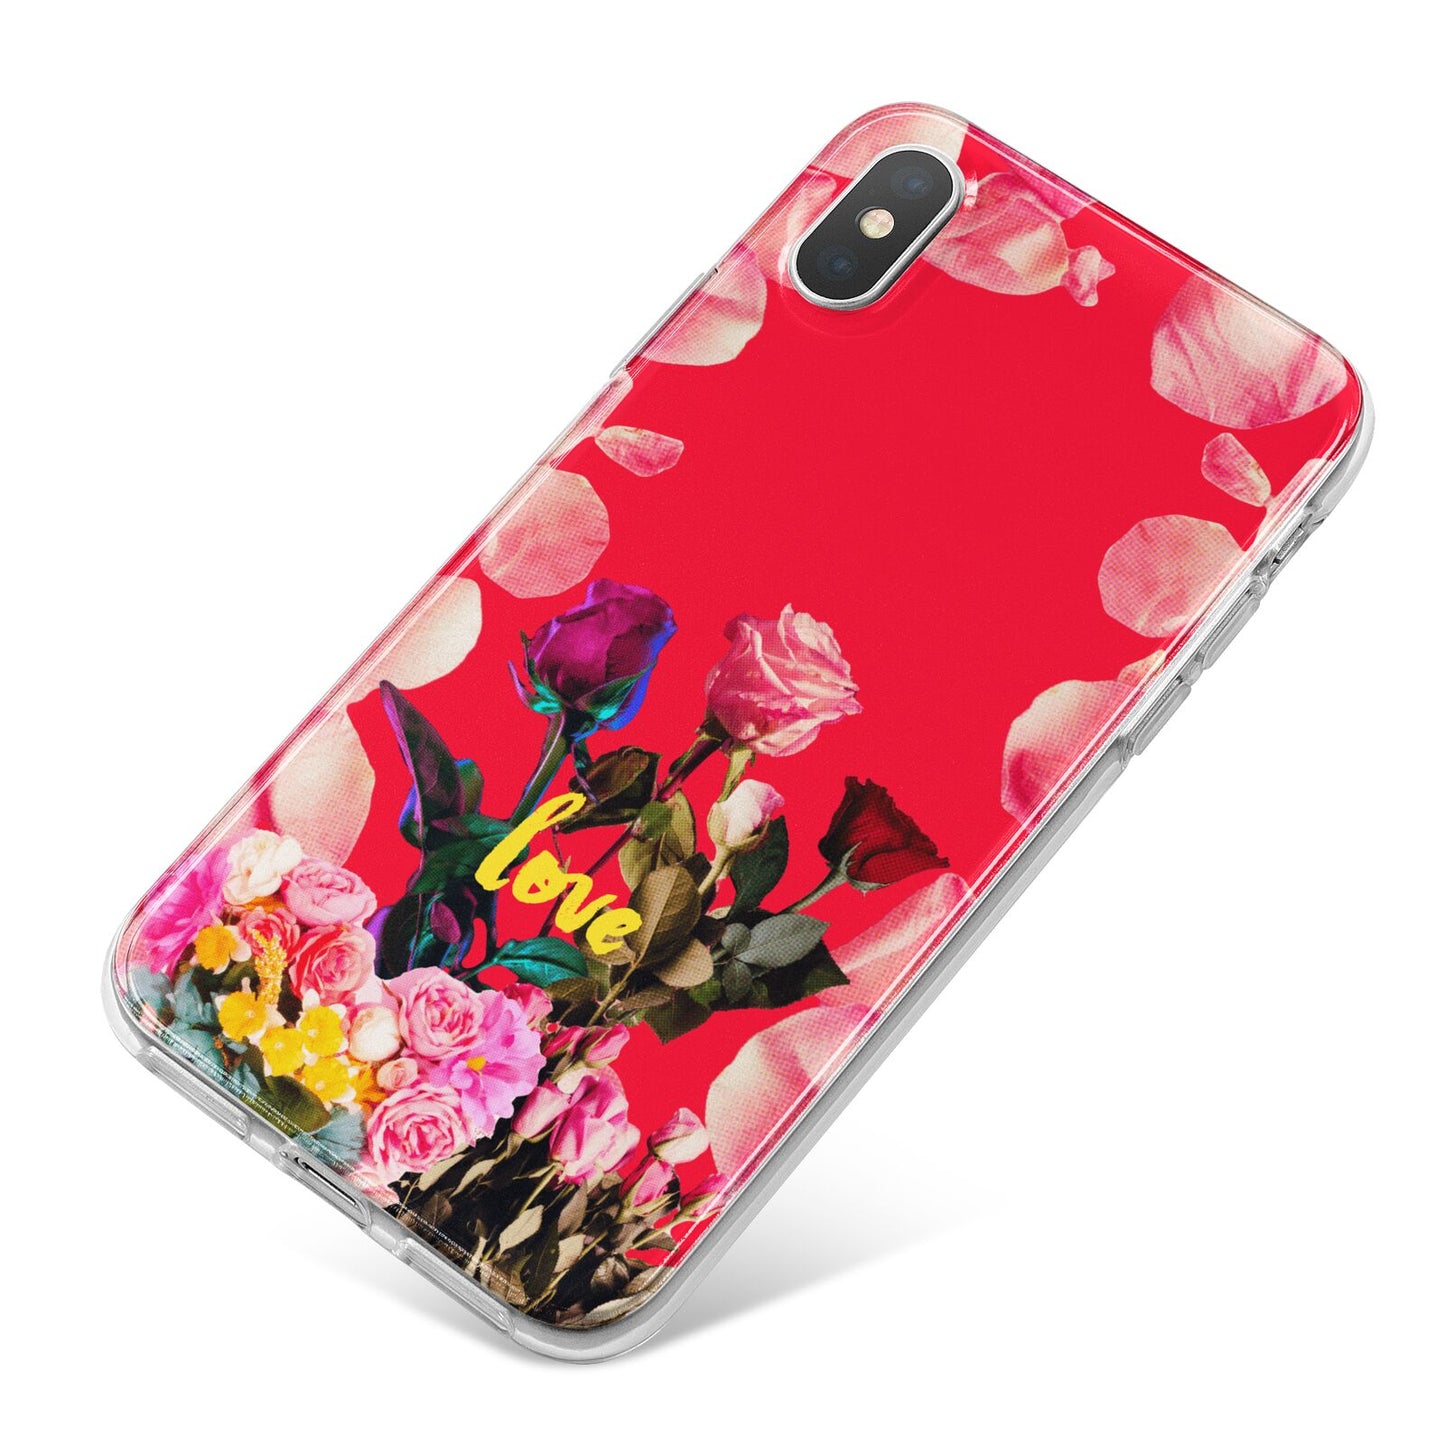 Retro Floral Valentine iPhone X Bumper Case on Silver iPhone